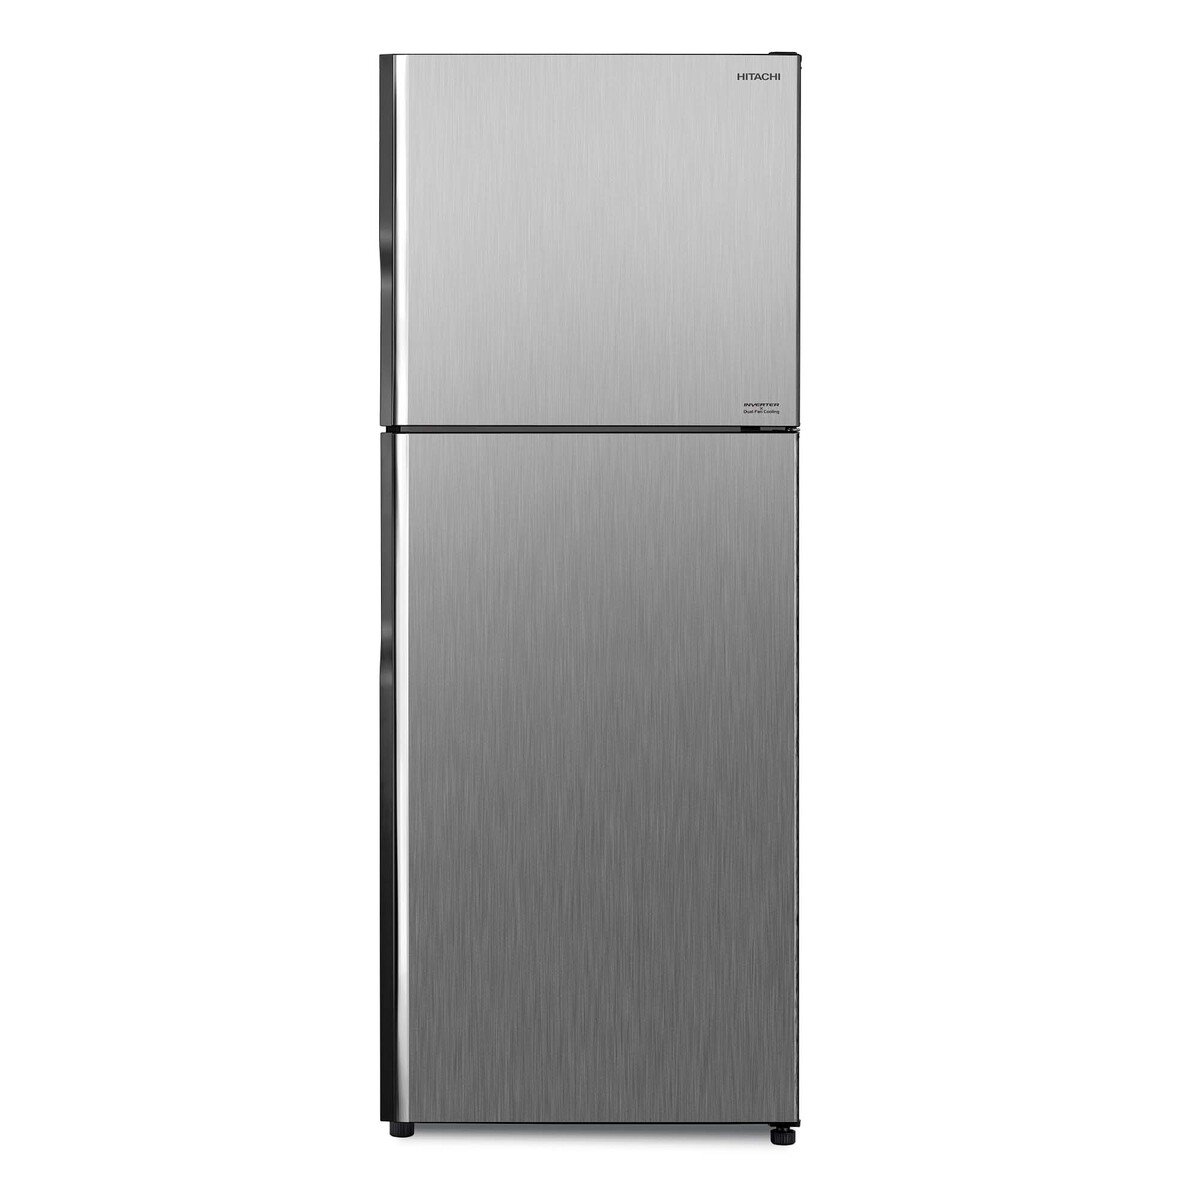 Hitachi Double Door Refrigerator RV505PUK8KPSV 500LTR